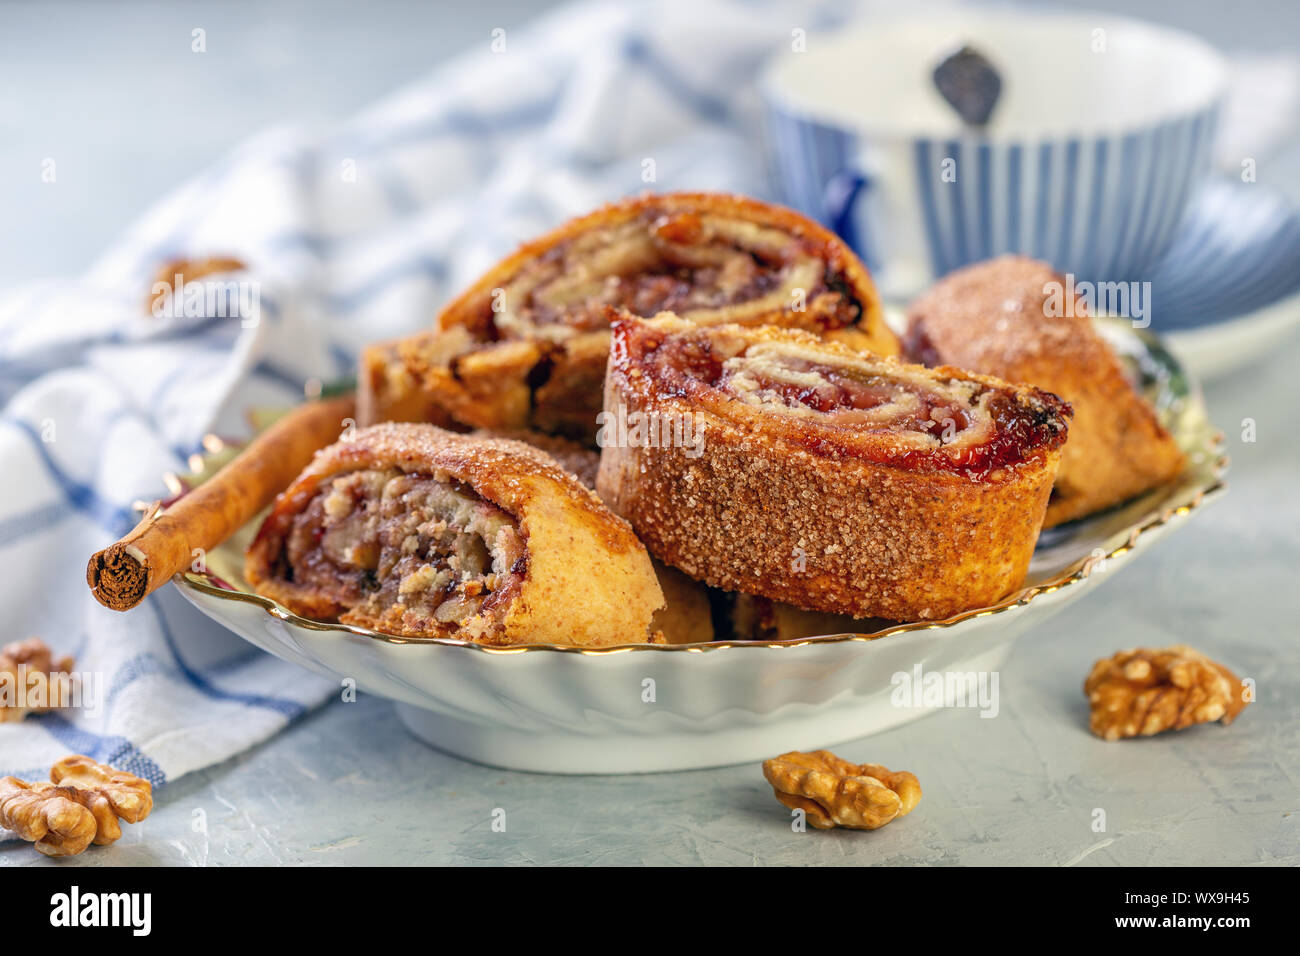 Rolls with jam, walnuts and raisins. Jewish cuisine. Stock Photo